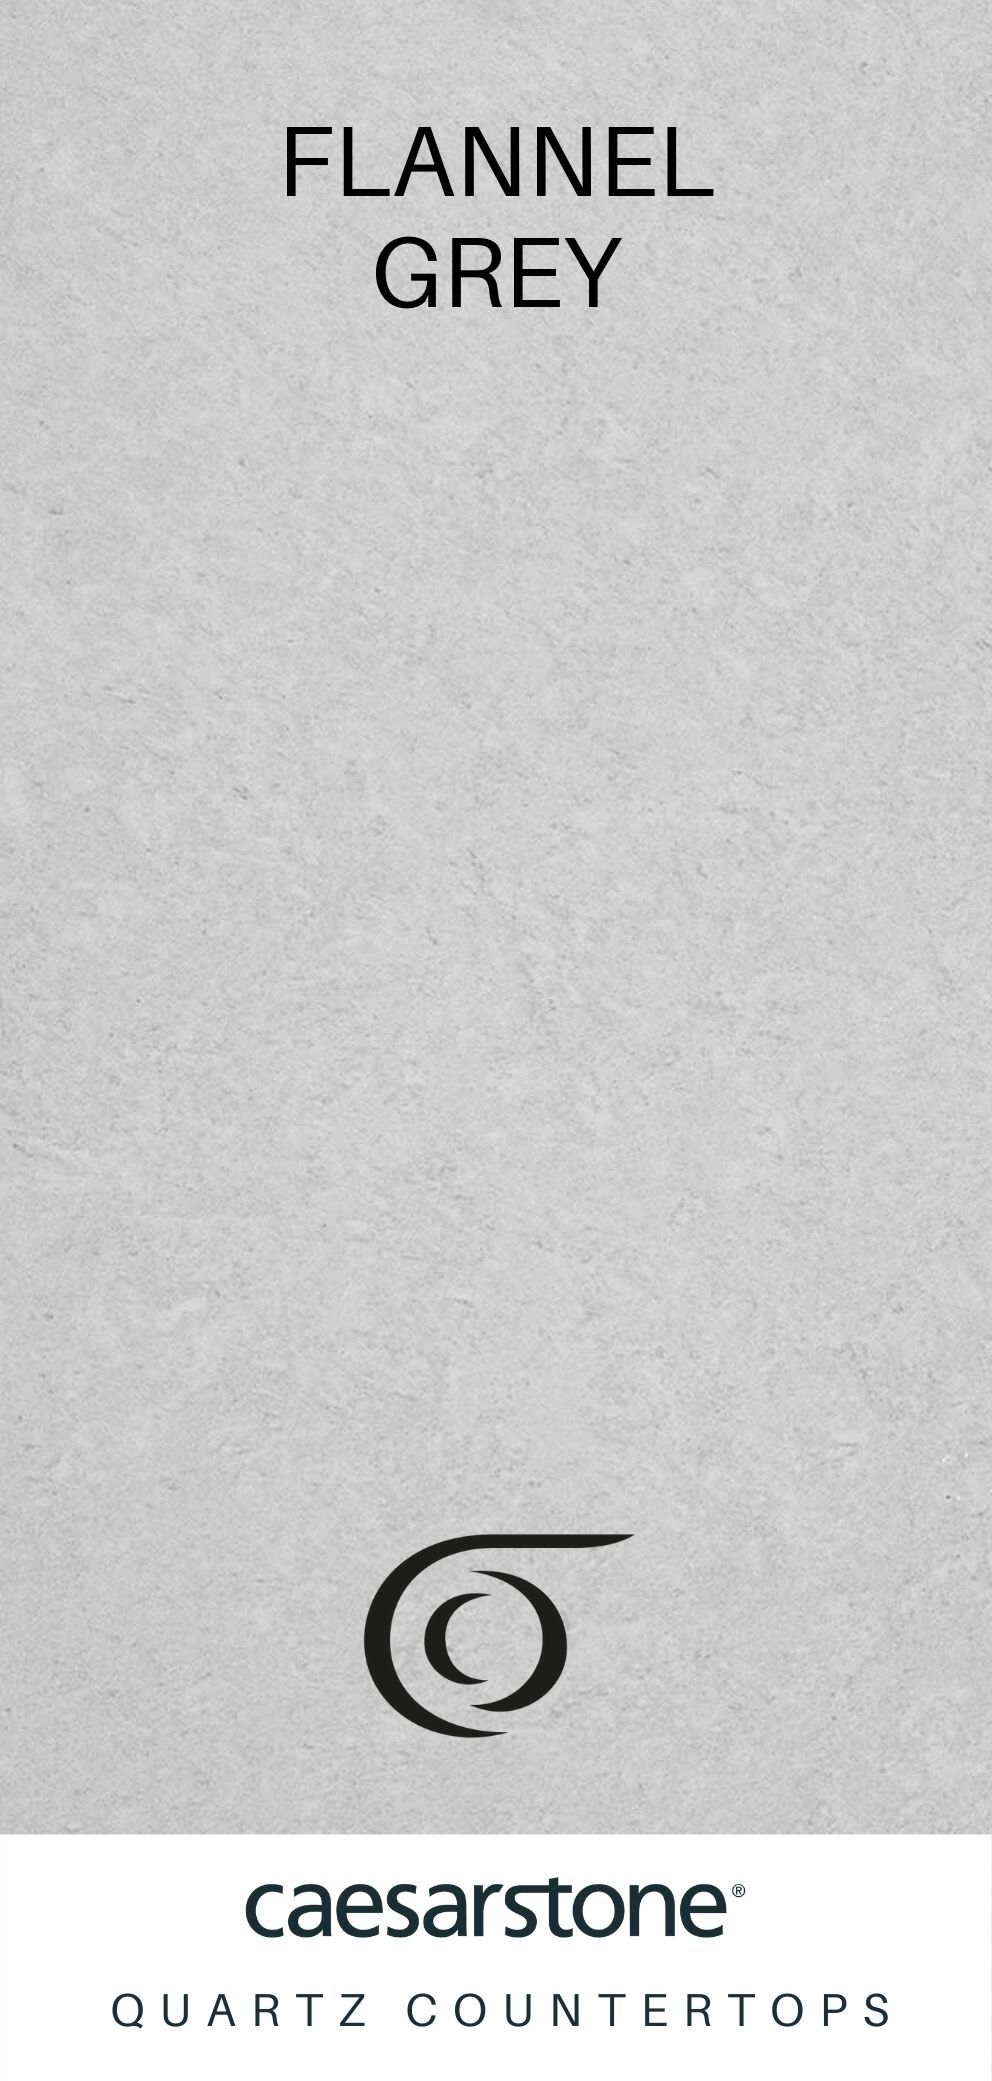 Caesarstone Quartz Countertops Flannel Grey